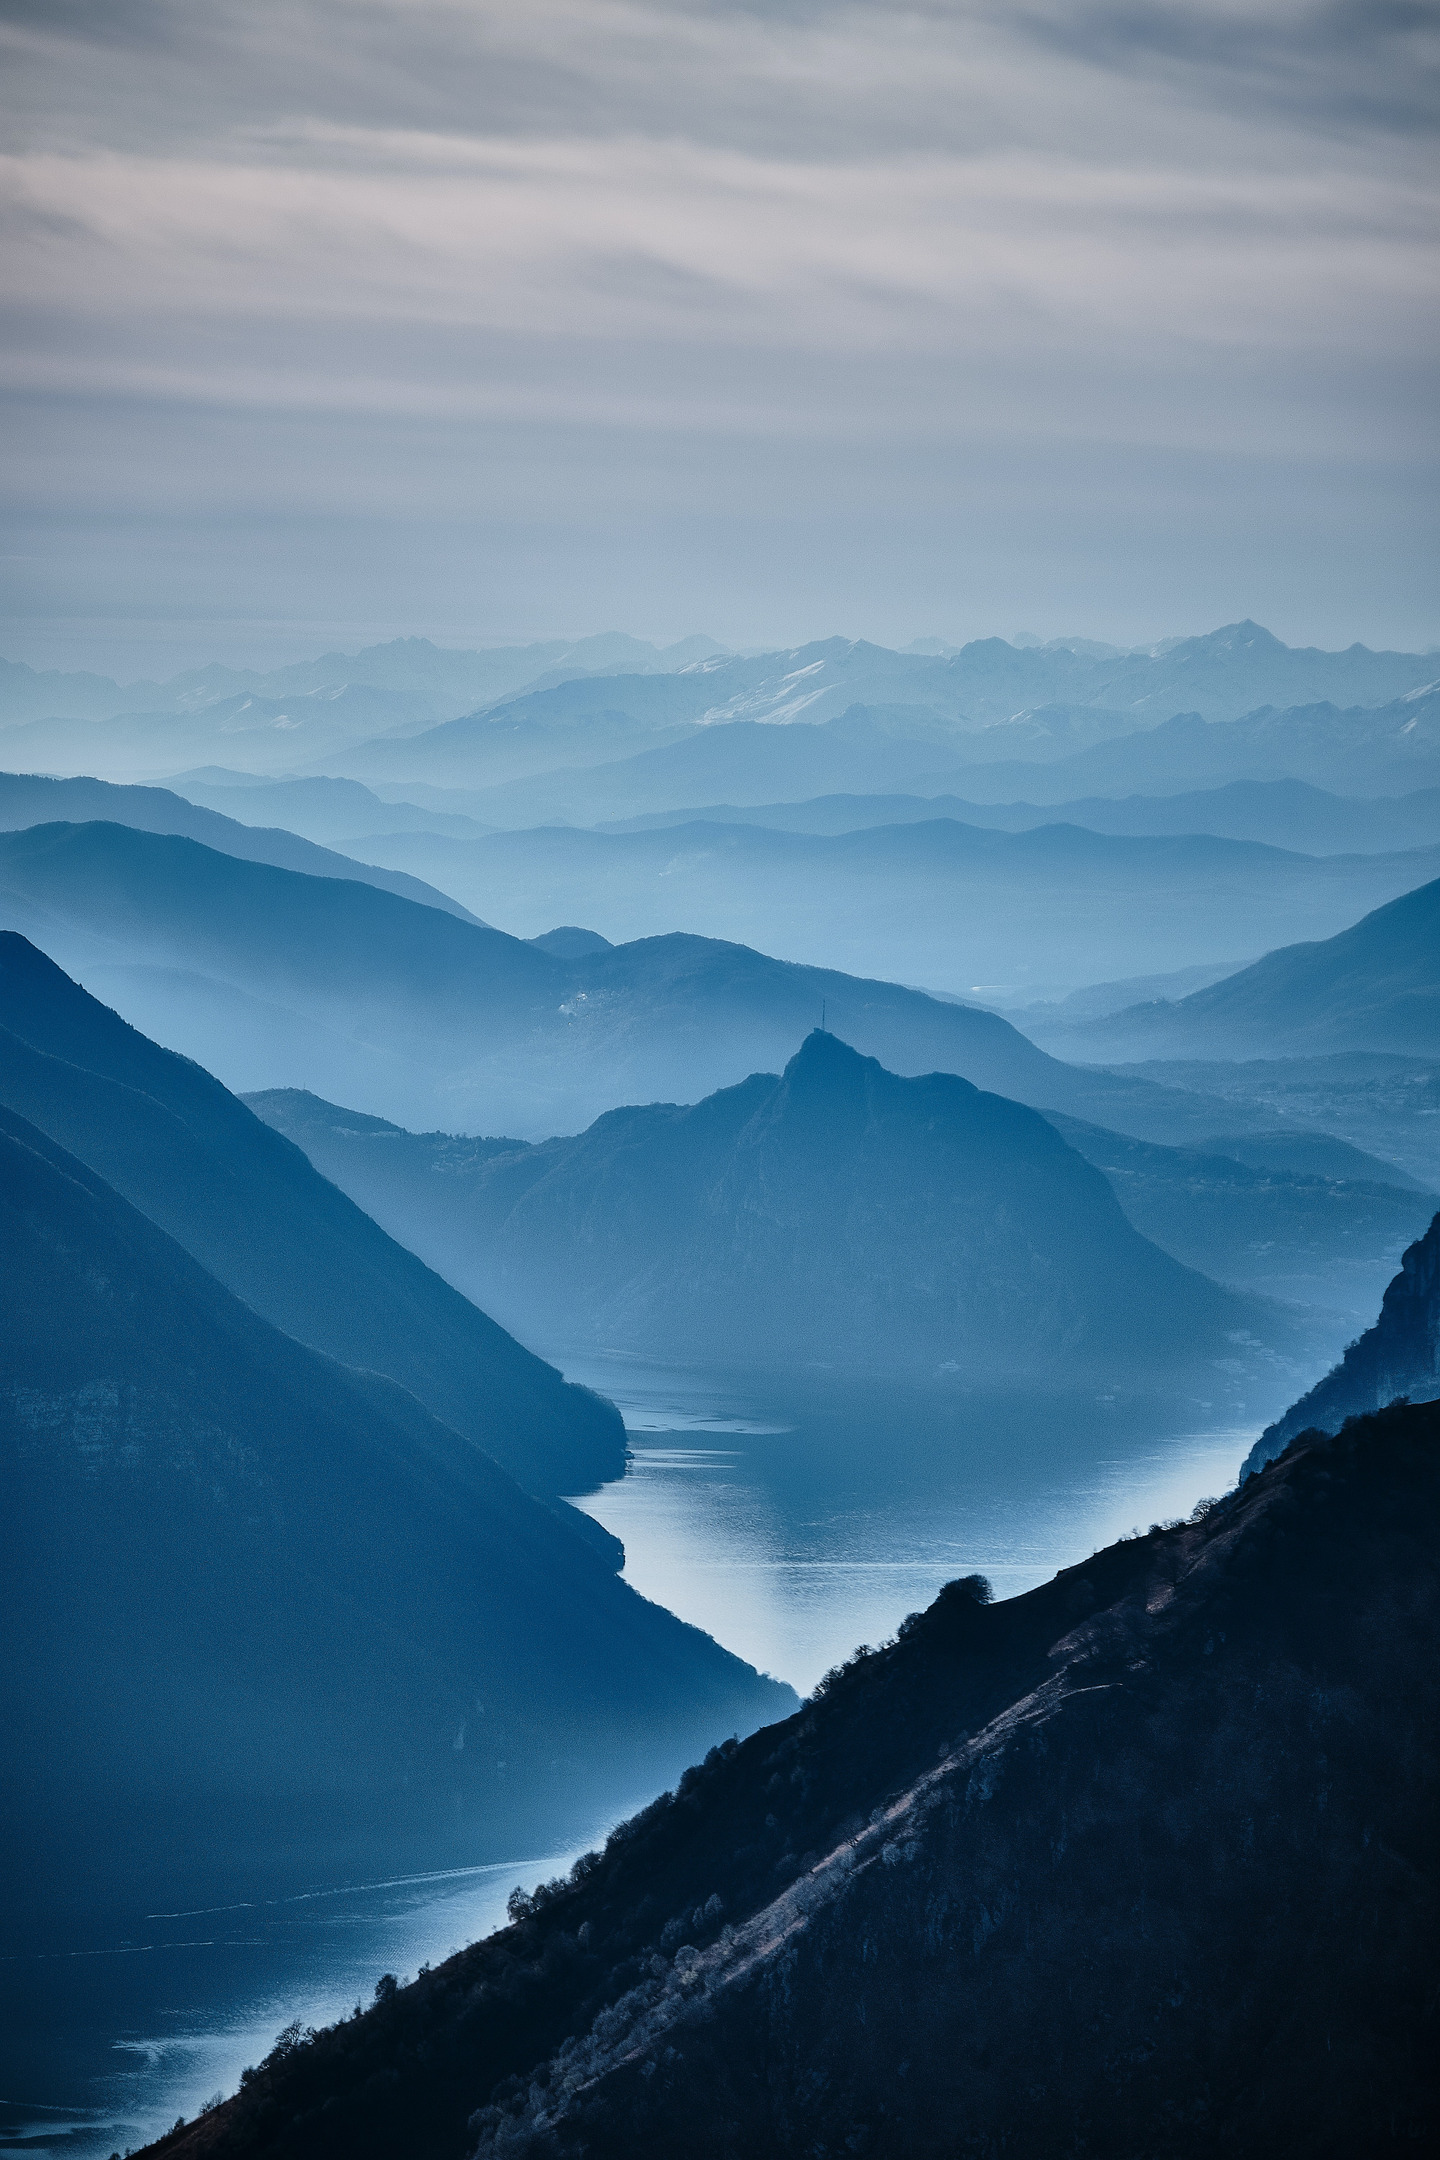 Stunning mountain landscape captured by Alexander Sterling